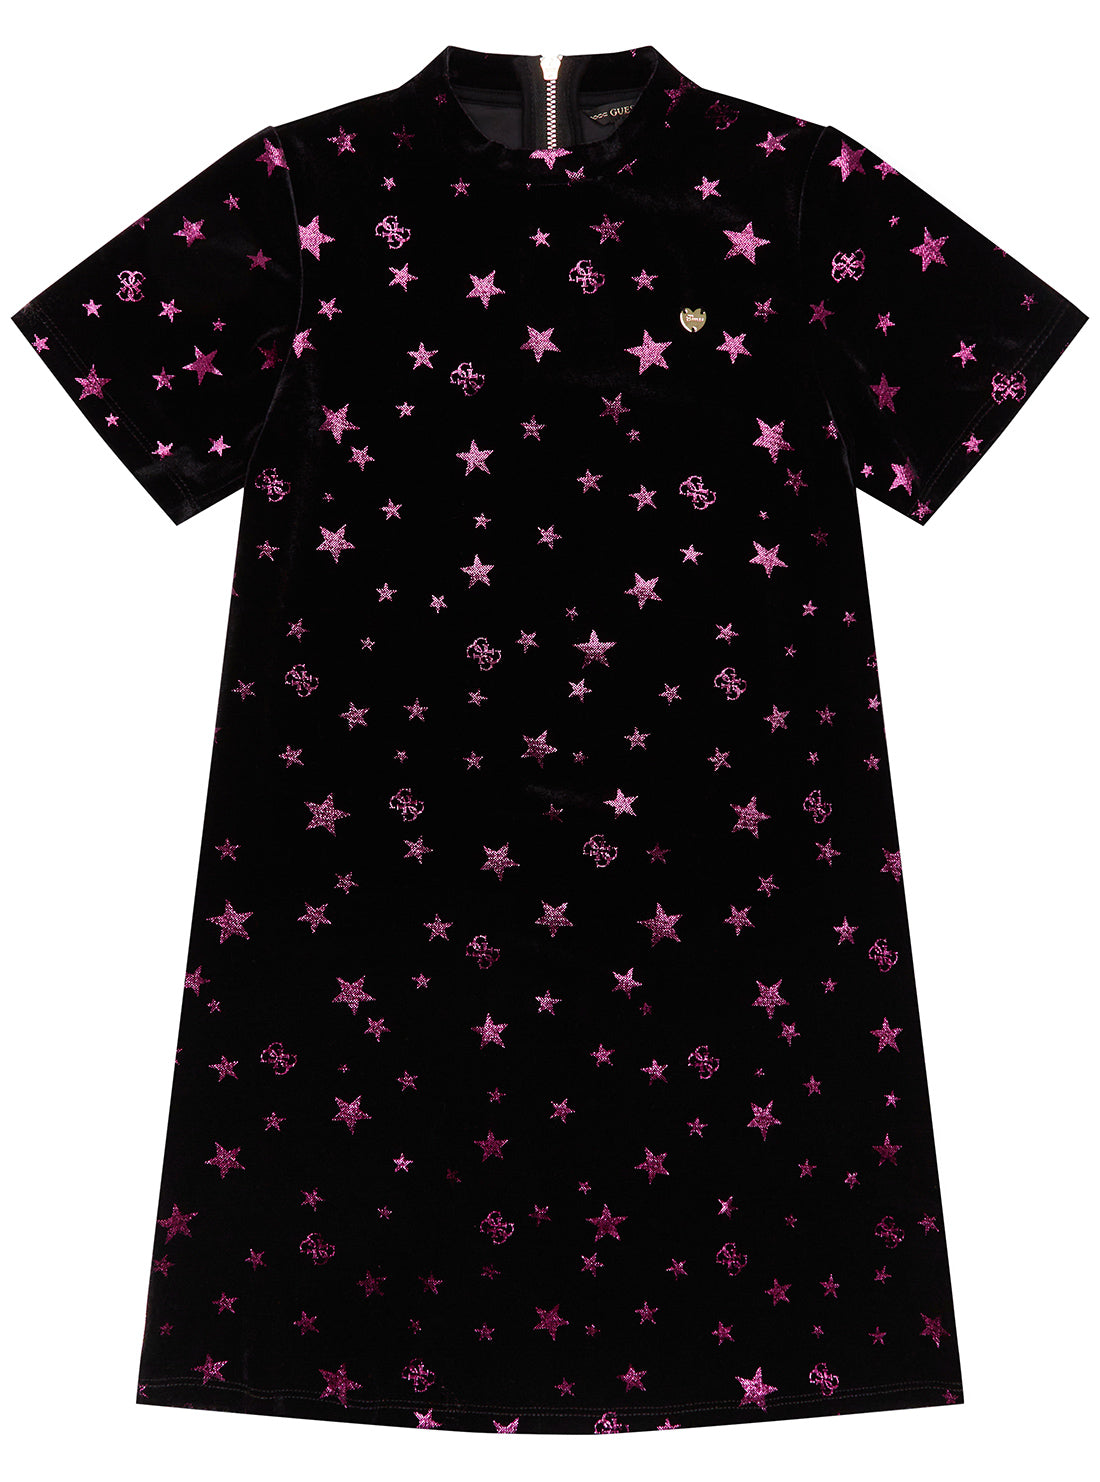 GUESS Black Star Print Short Sleeves Dress (2-7) front view